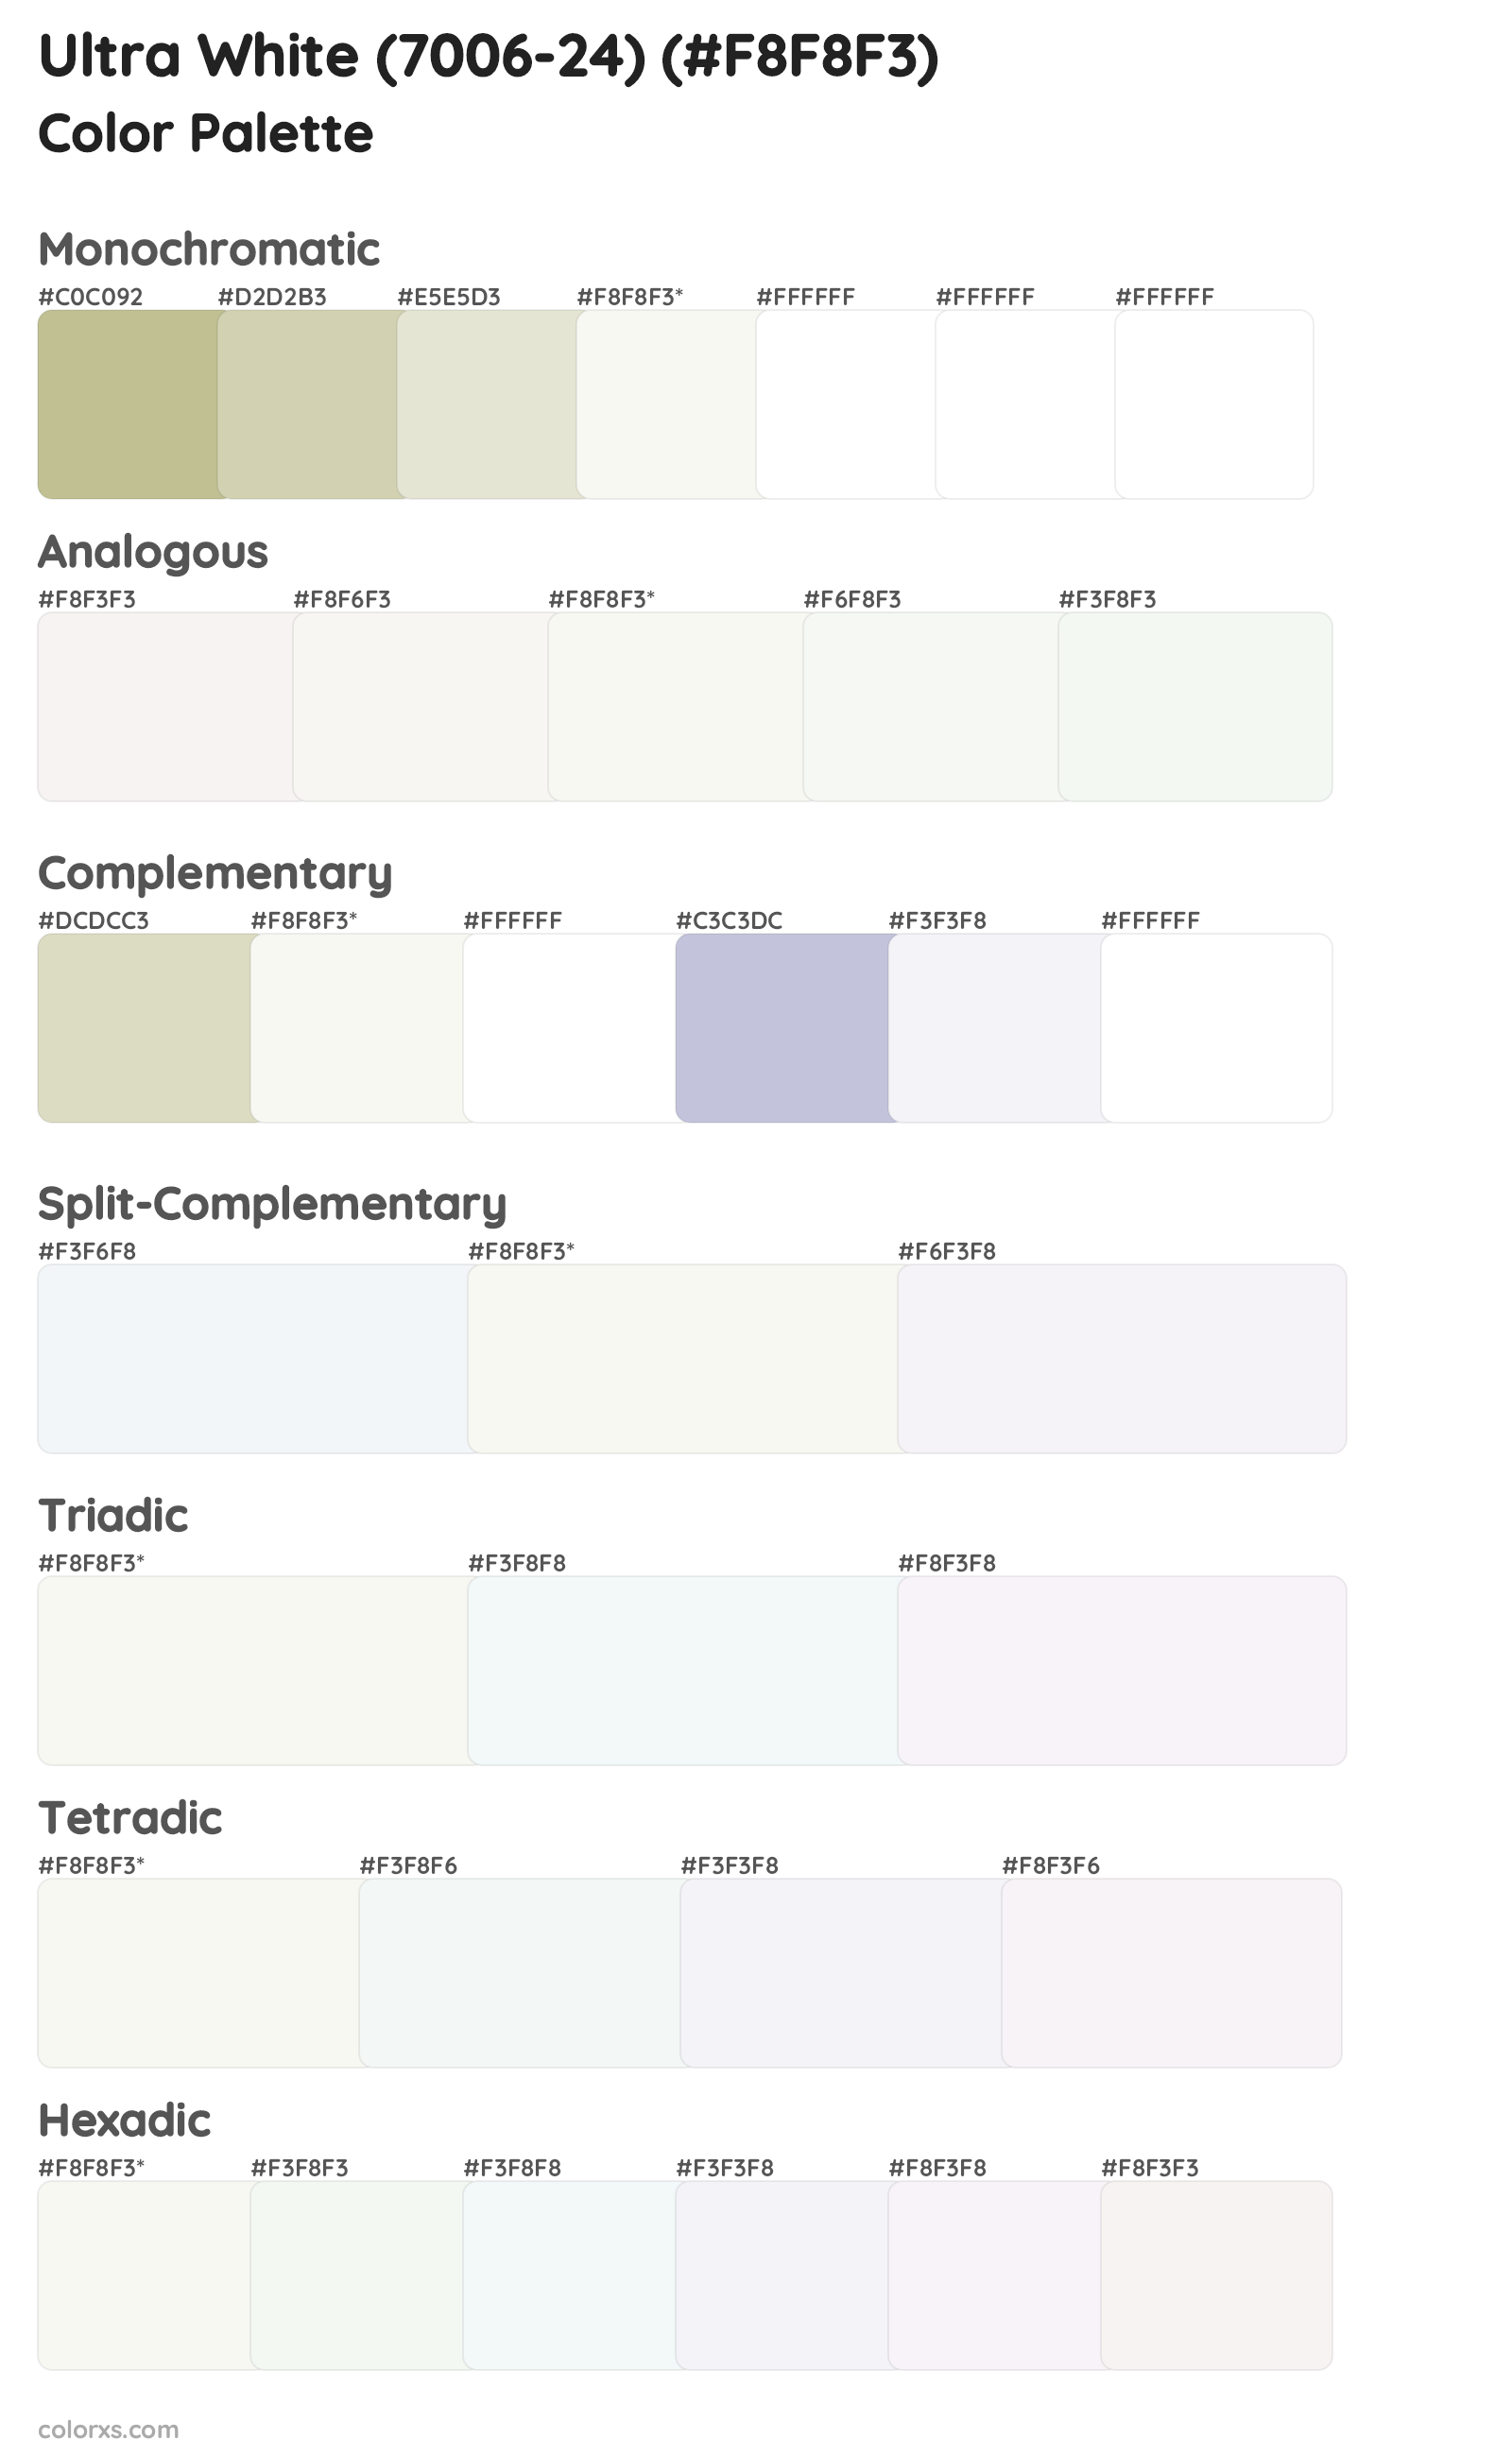 Ultra White (7006-24) Color Scheme Palettes